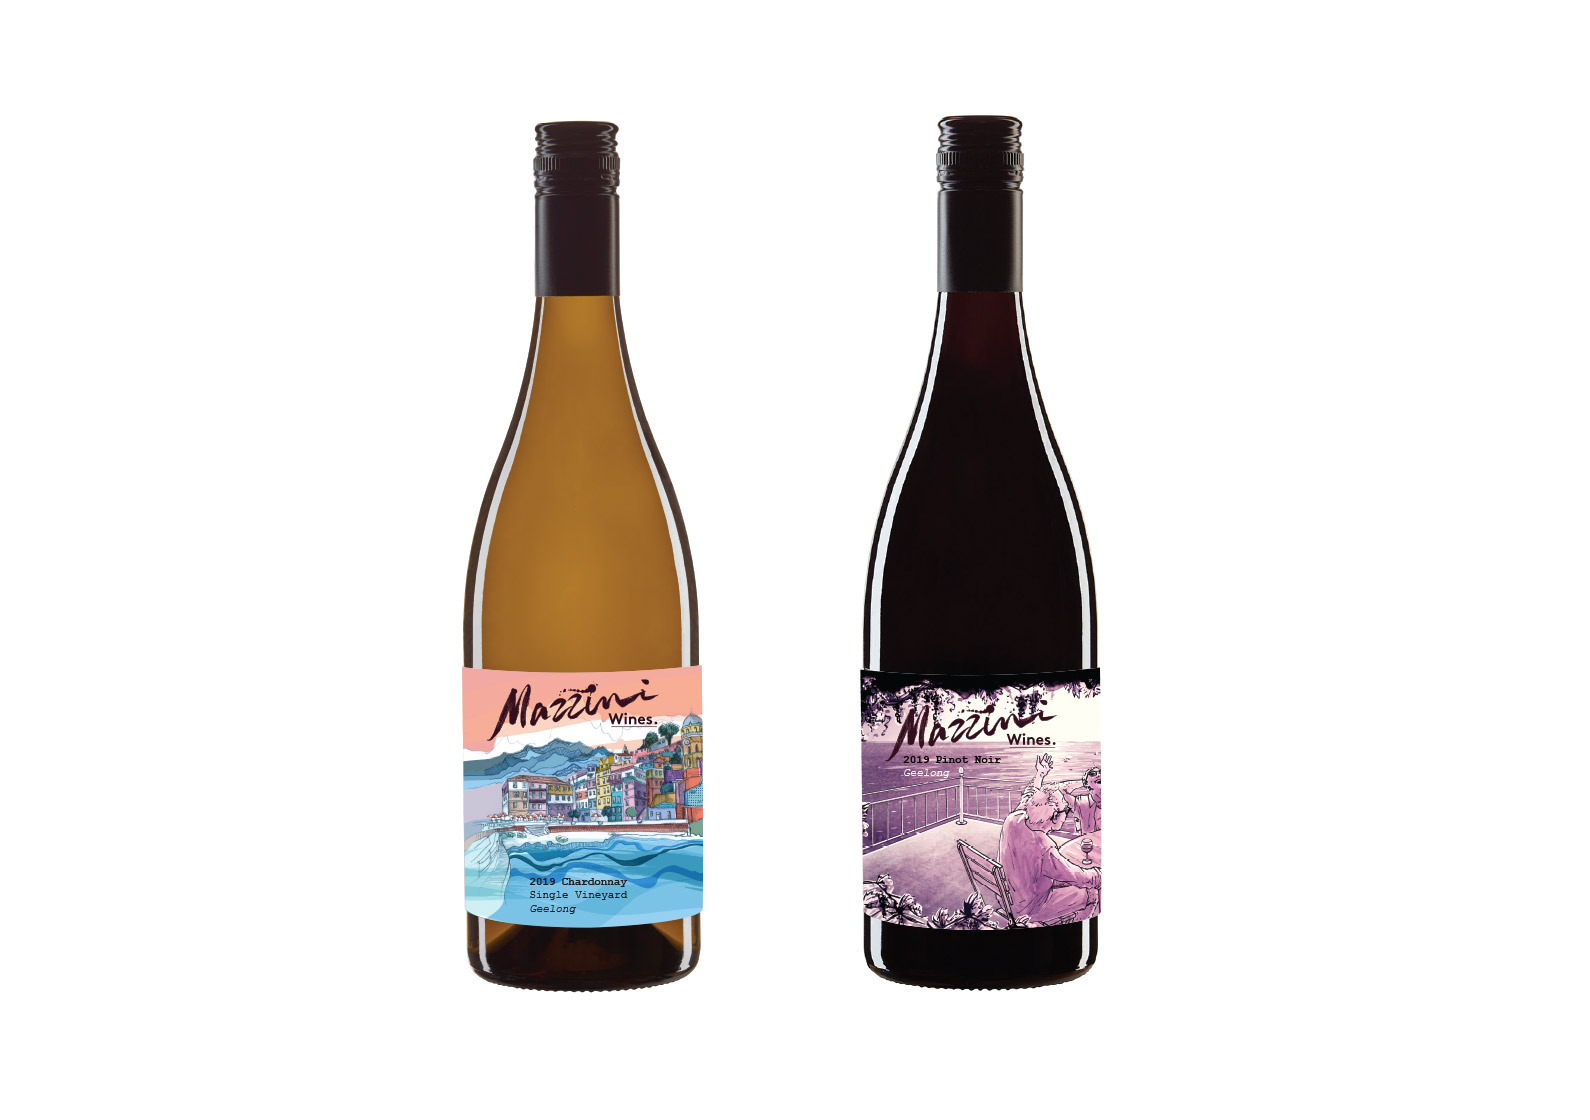 Studio-Mimi-Moon-Mazzini-Wines-wine-labels